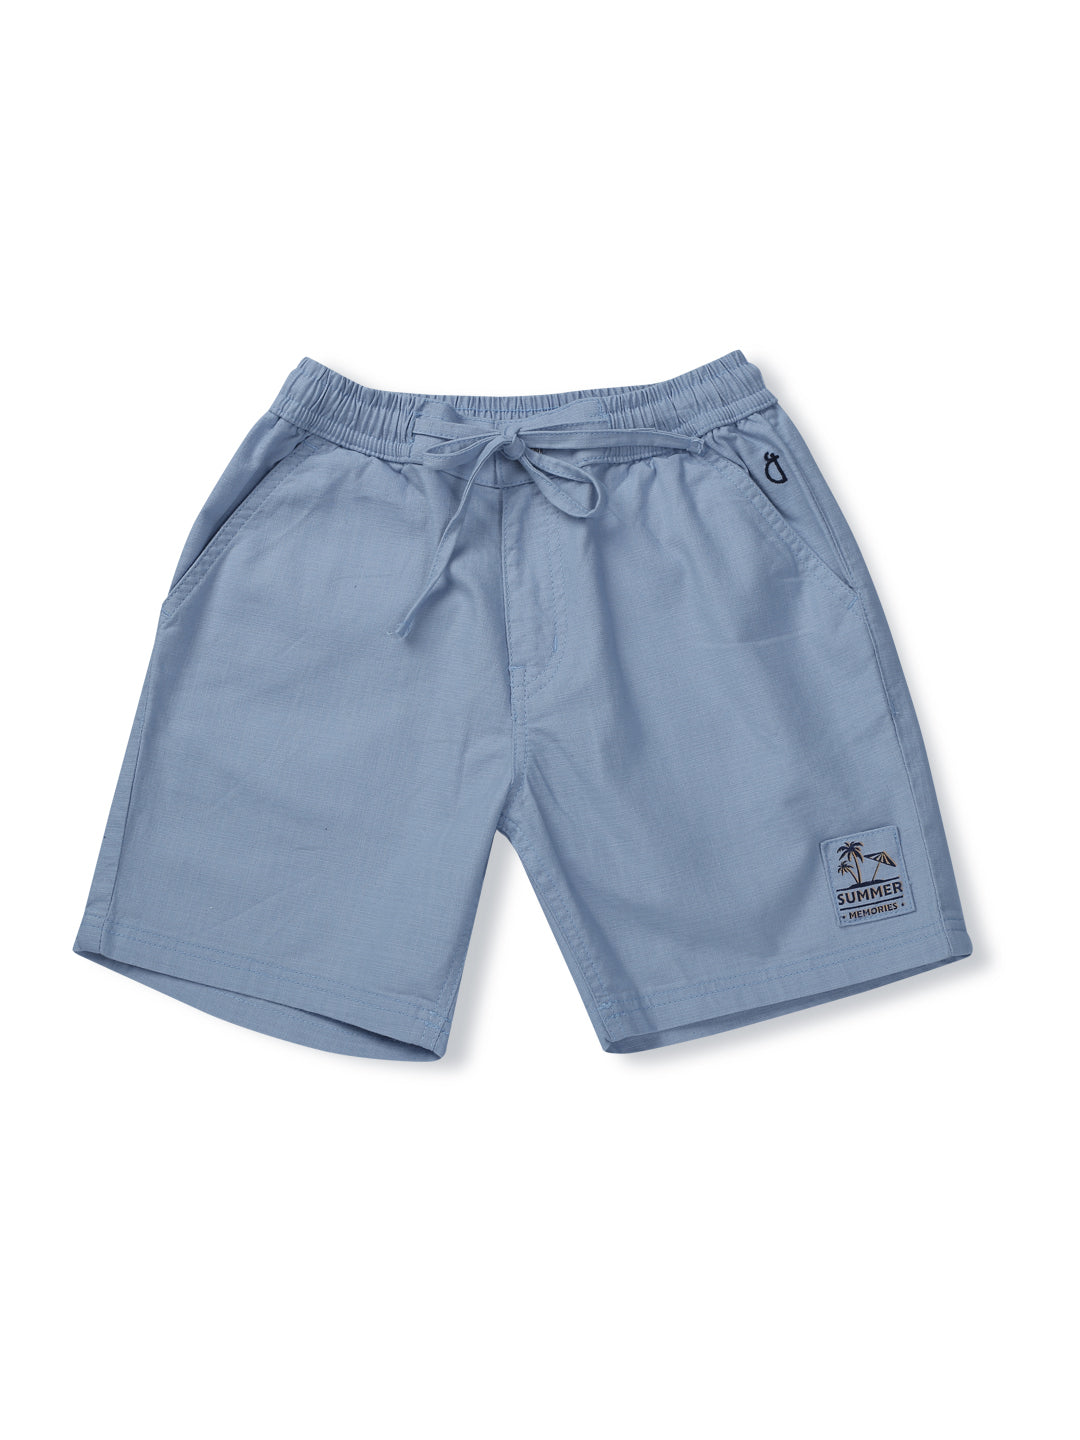 Boys Blue Cotton Solid Shorts